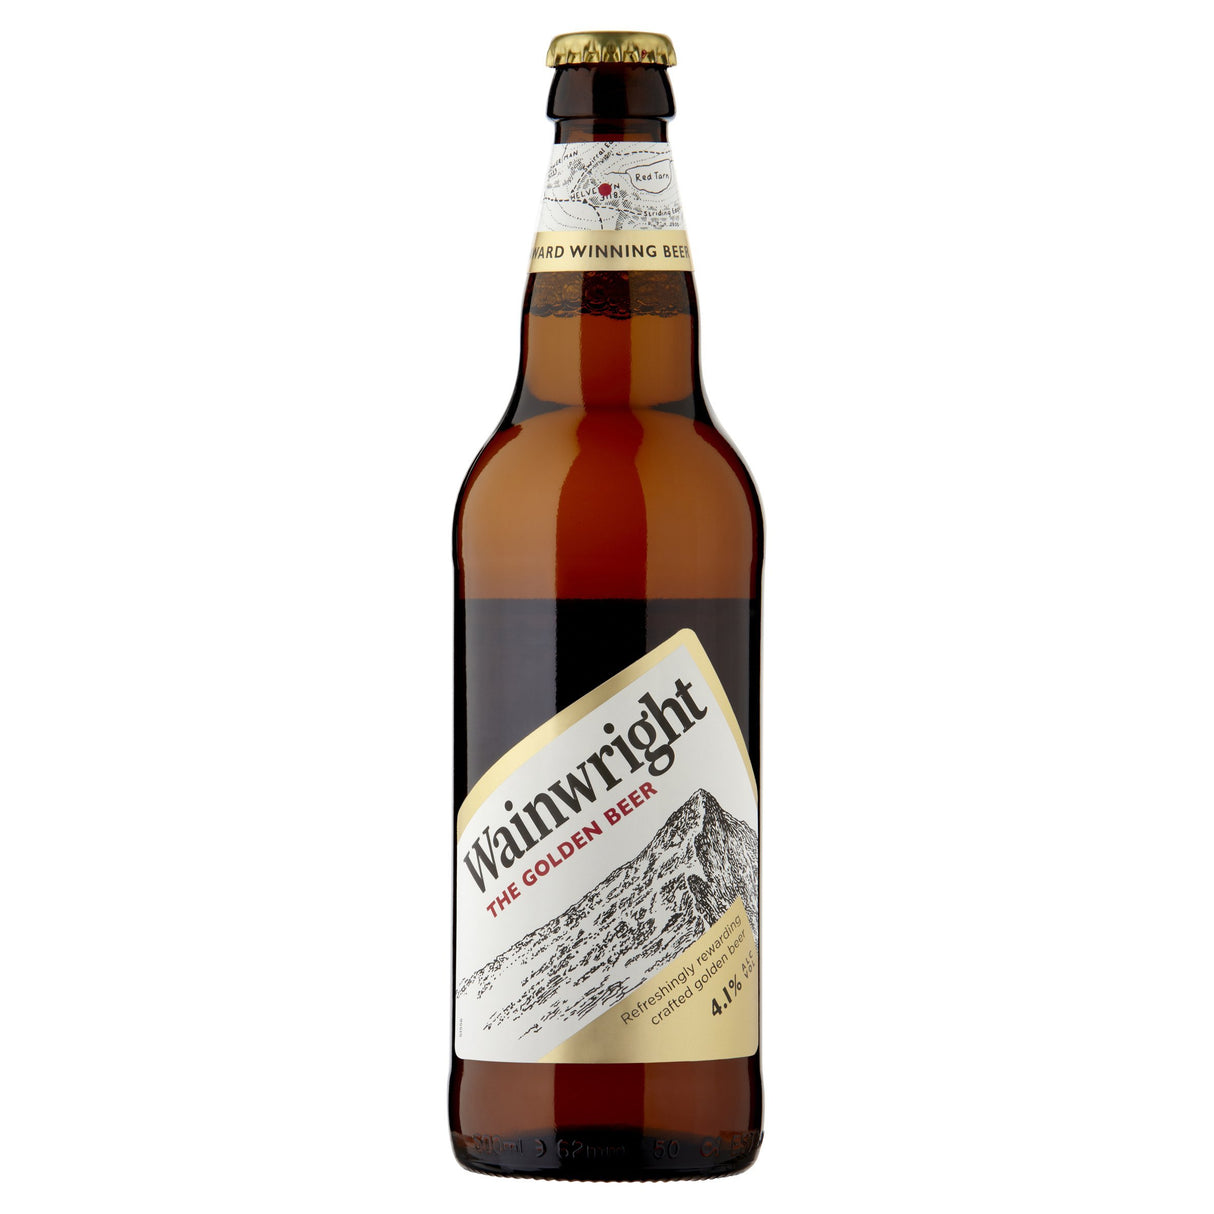 Wainwright Golden Ale 4.1% 500ml x 1 units